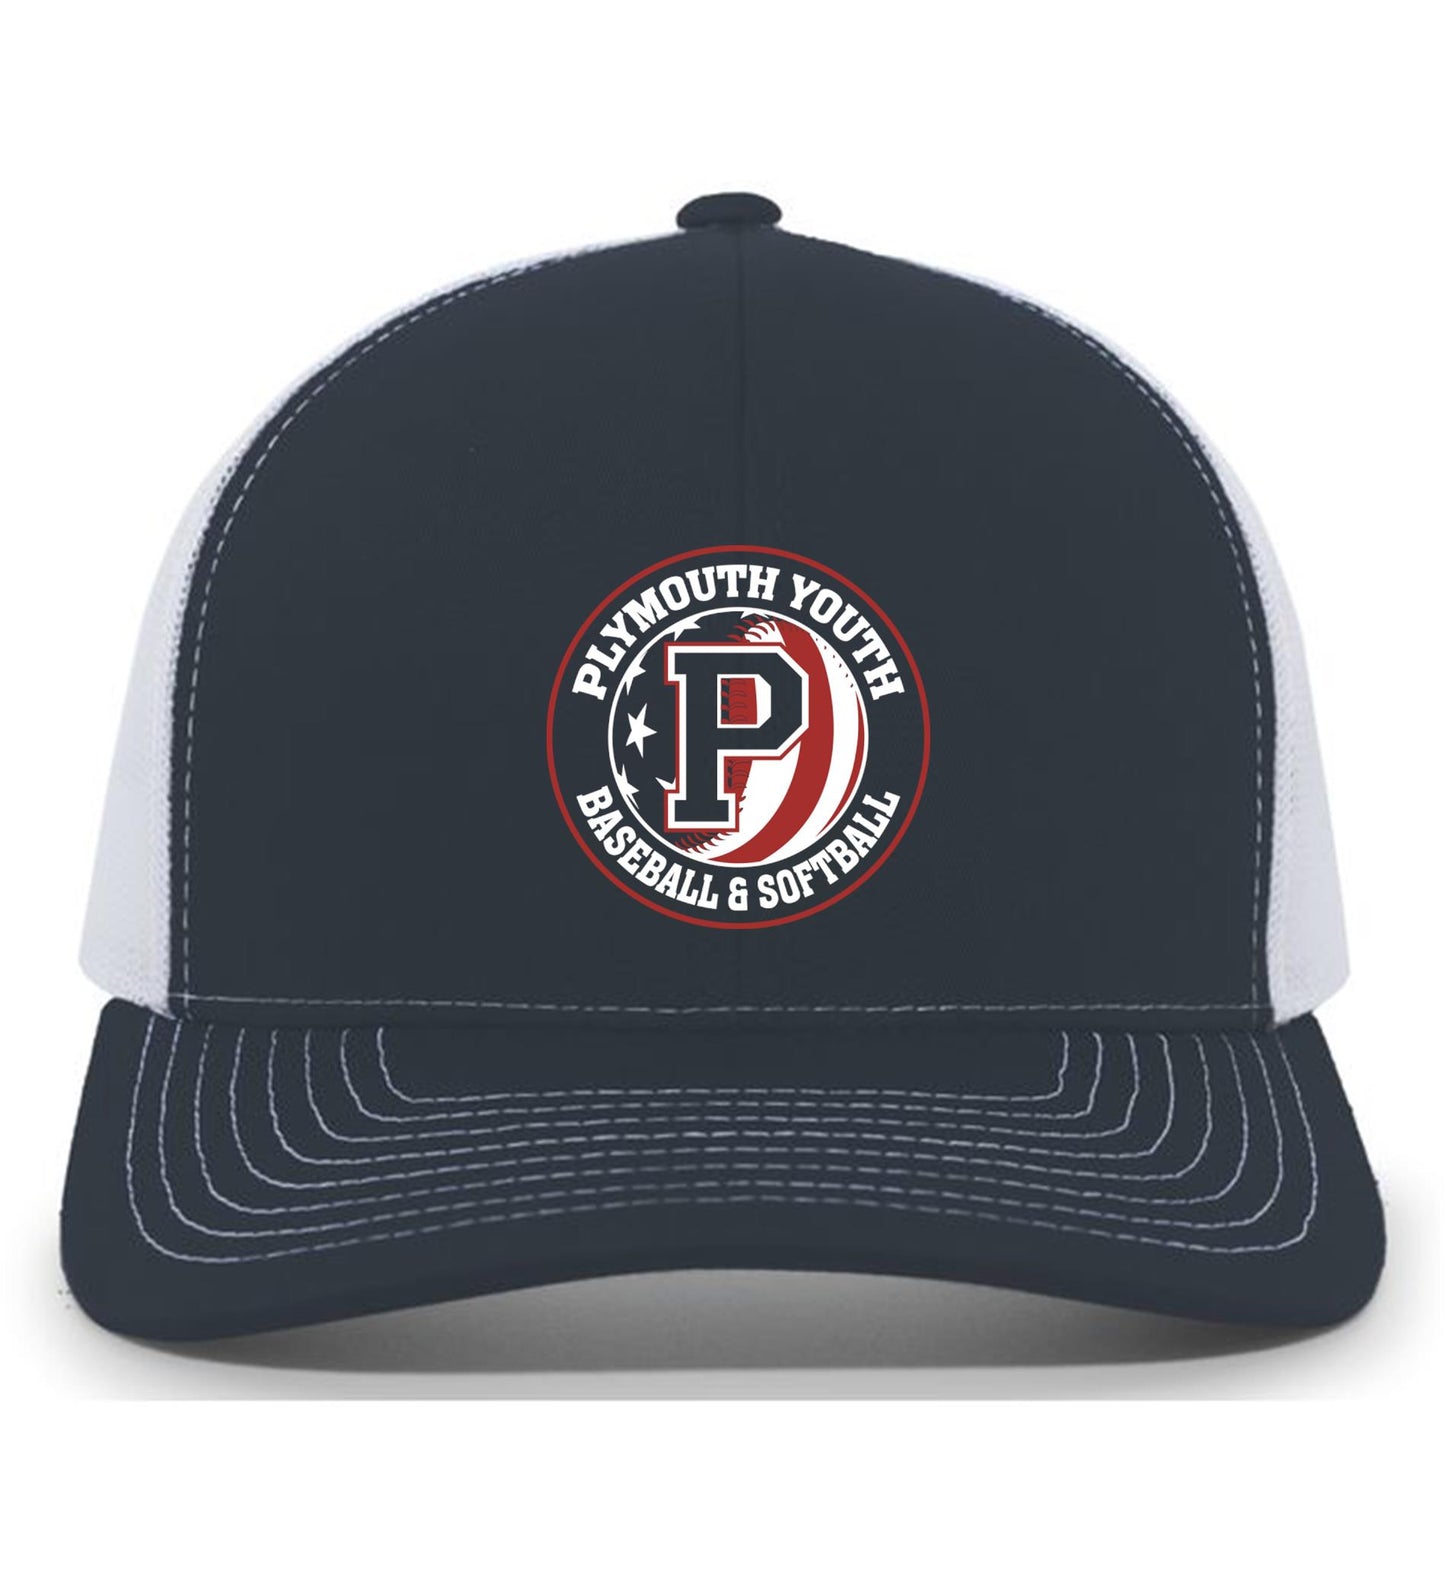 PYBS Trucker Hat